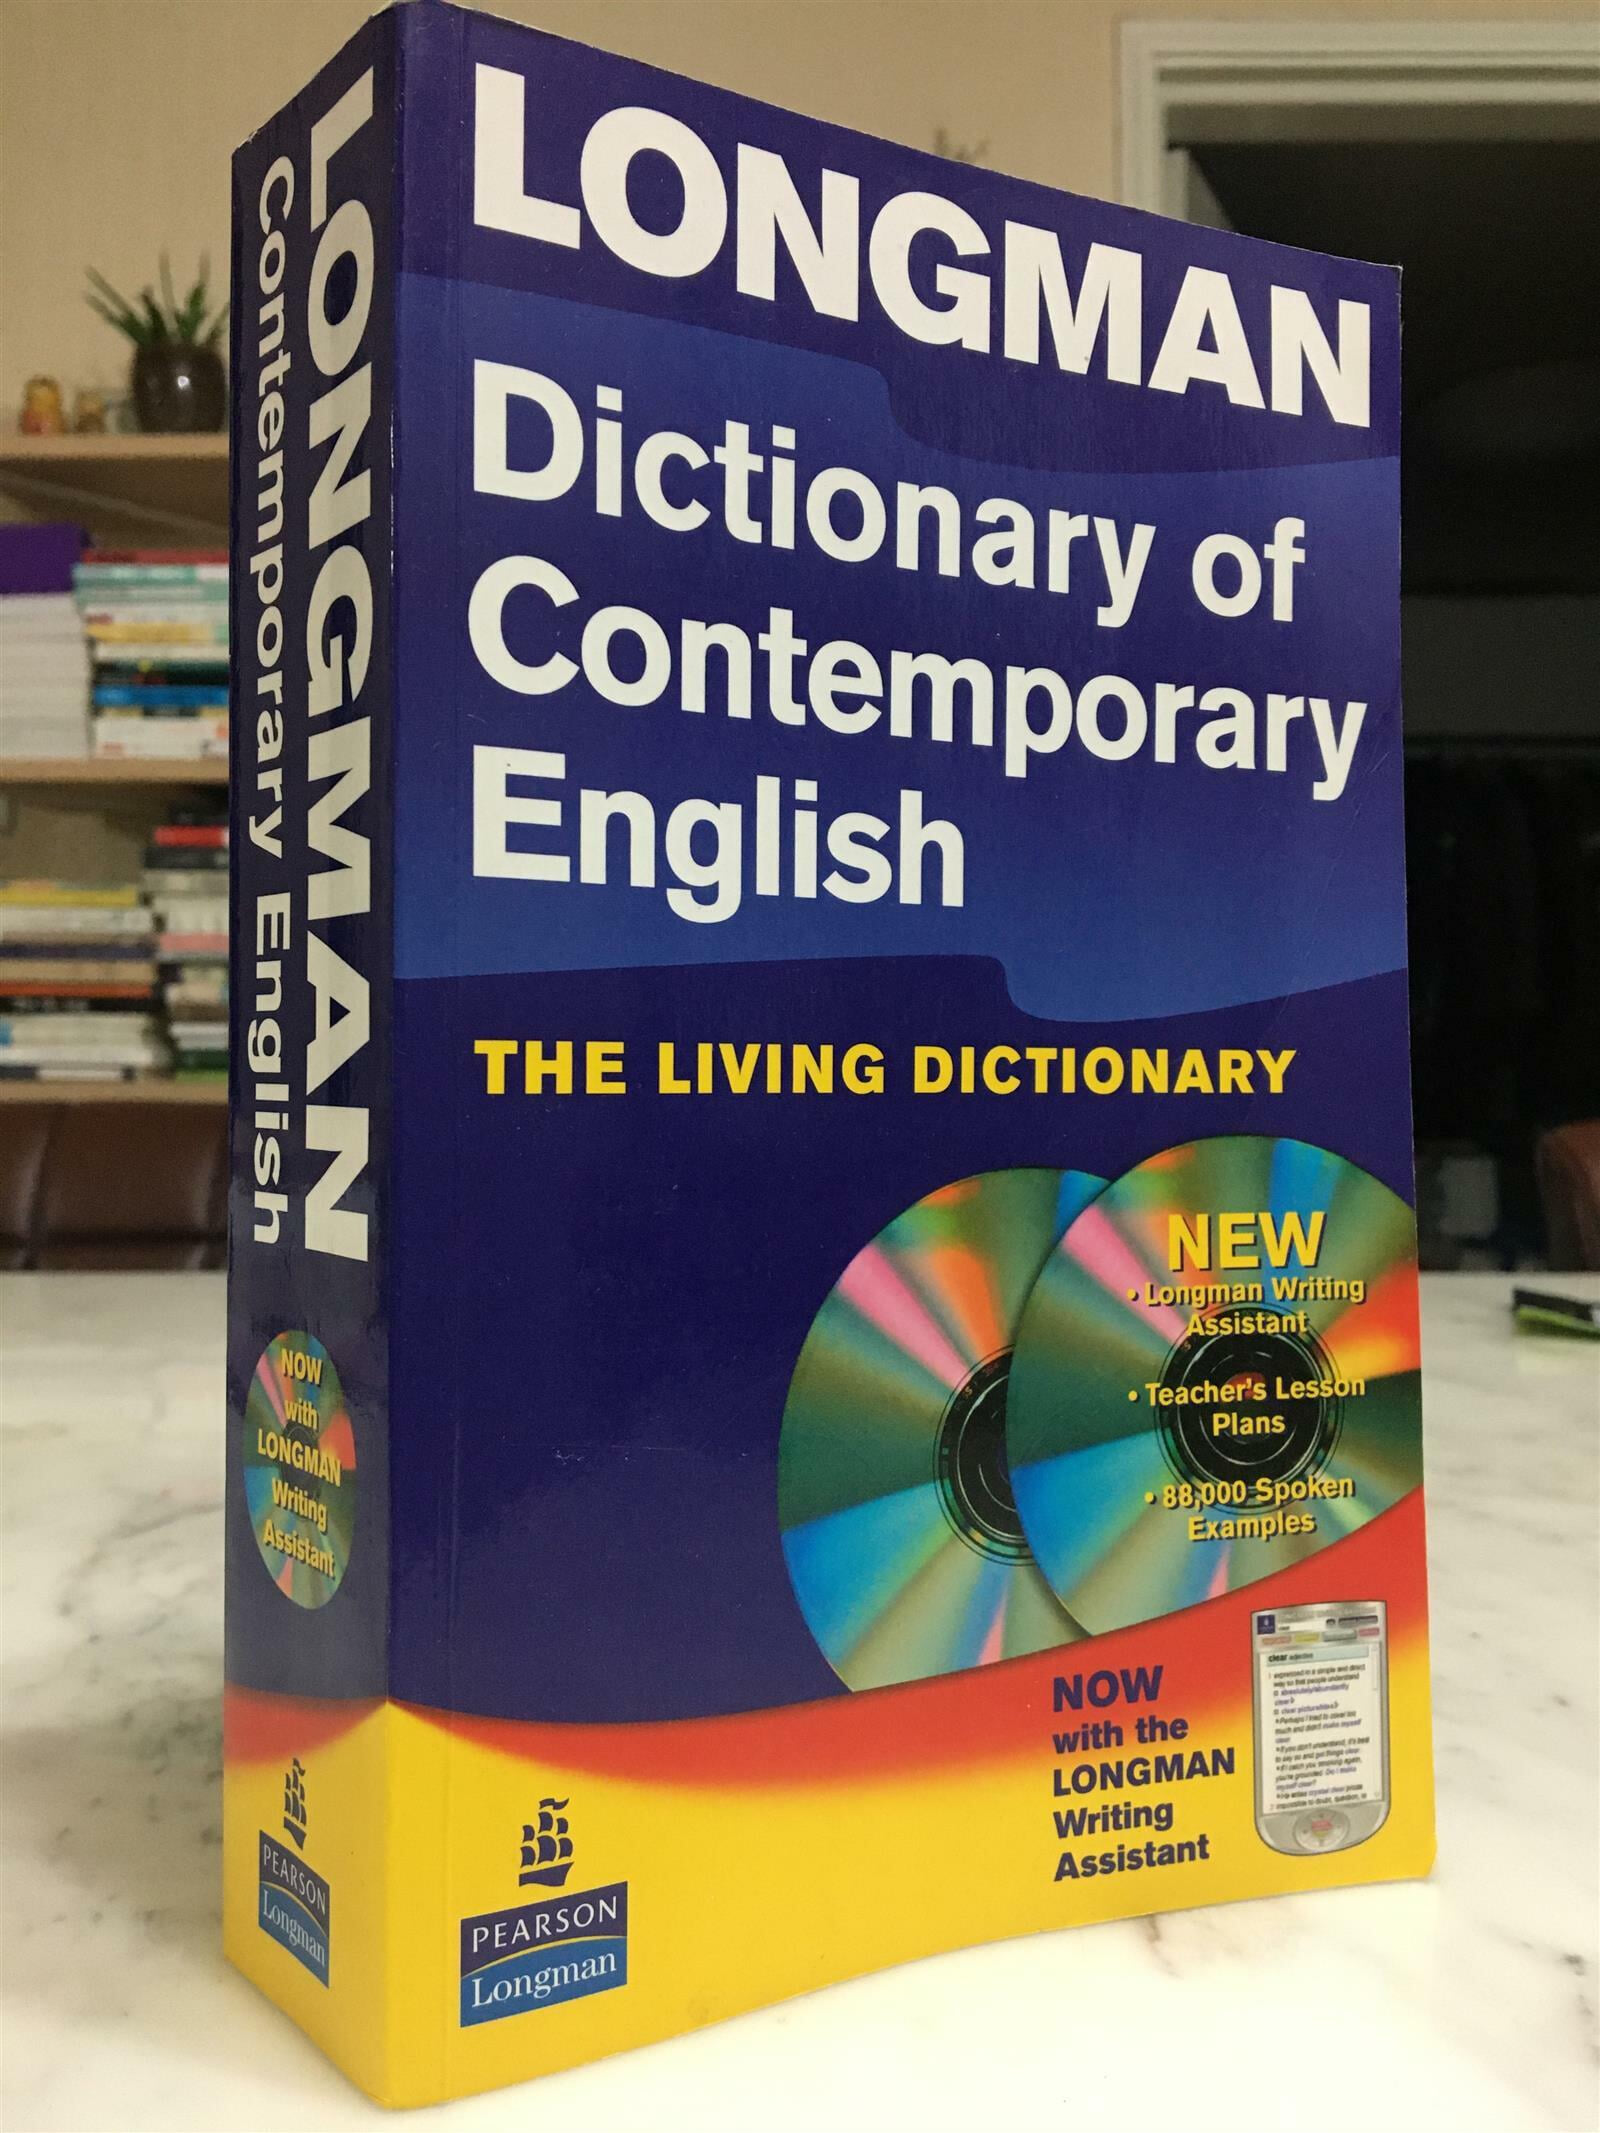 Longman Dictionary of Contemporary English: The Living Dictionary